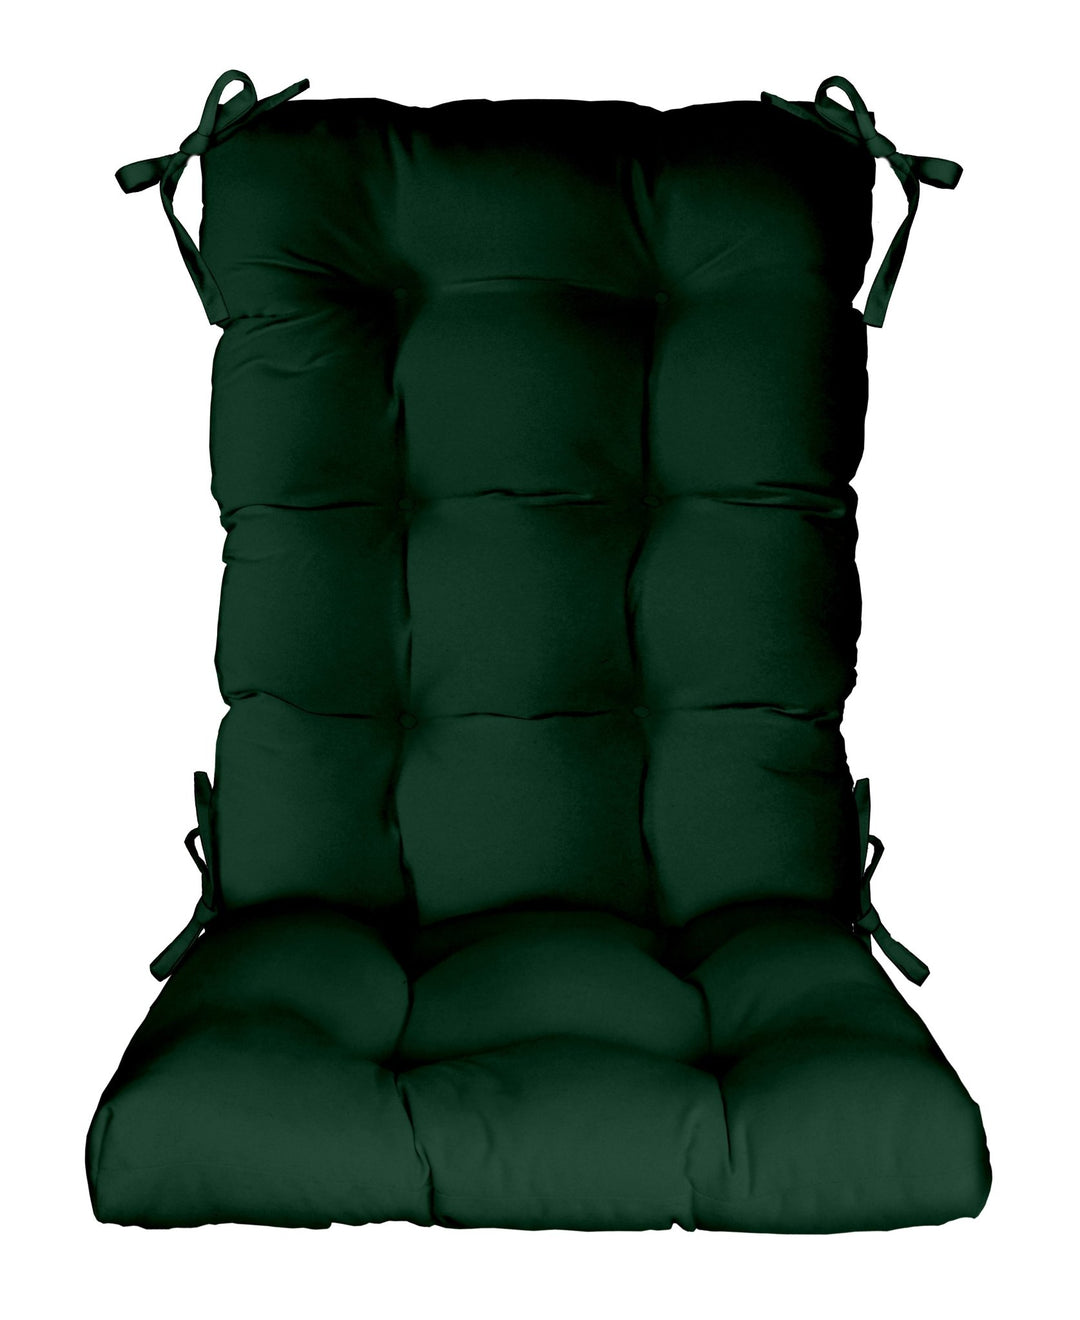 Tufted Rocker Rocking Chair Cushions, Large, Sunbrella Solids - RSH Decor